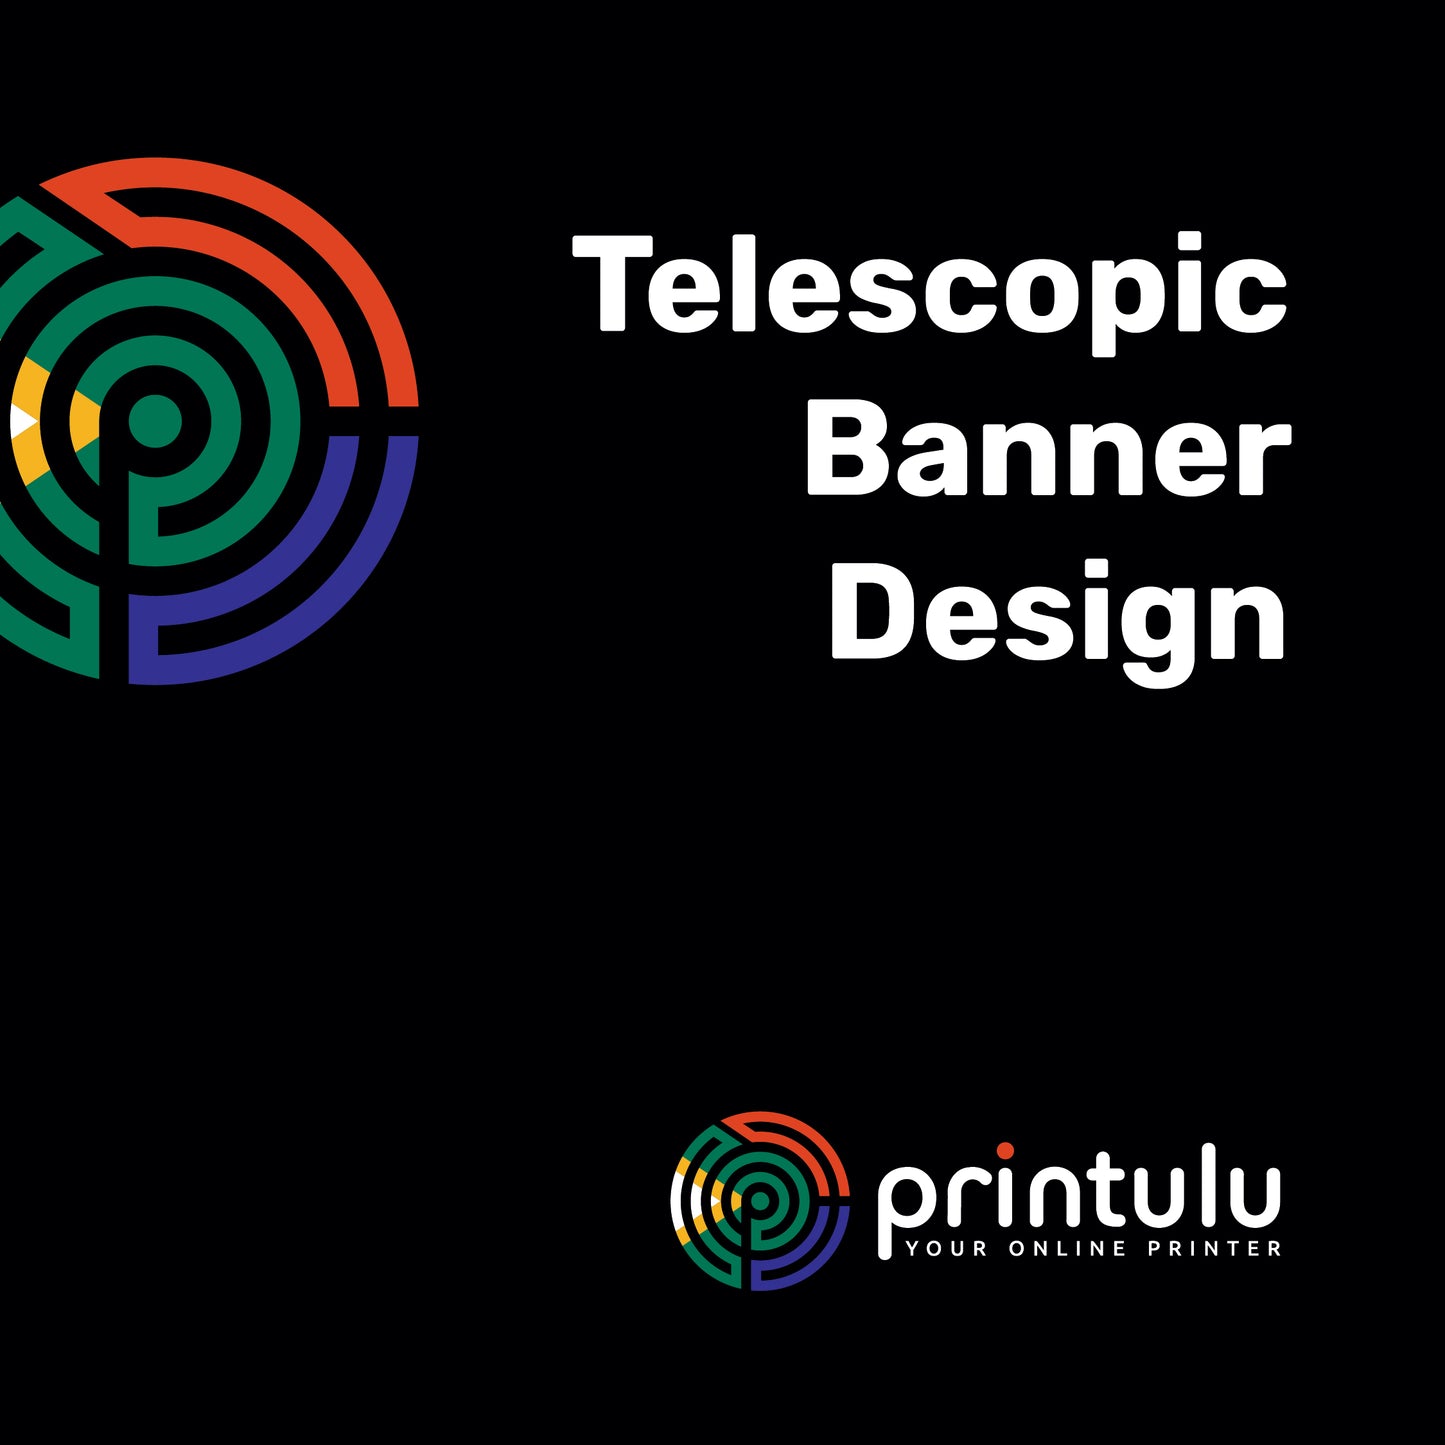 Telescopic Banner Design